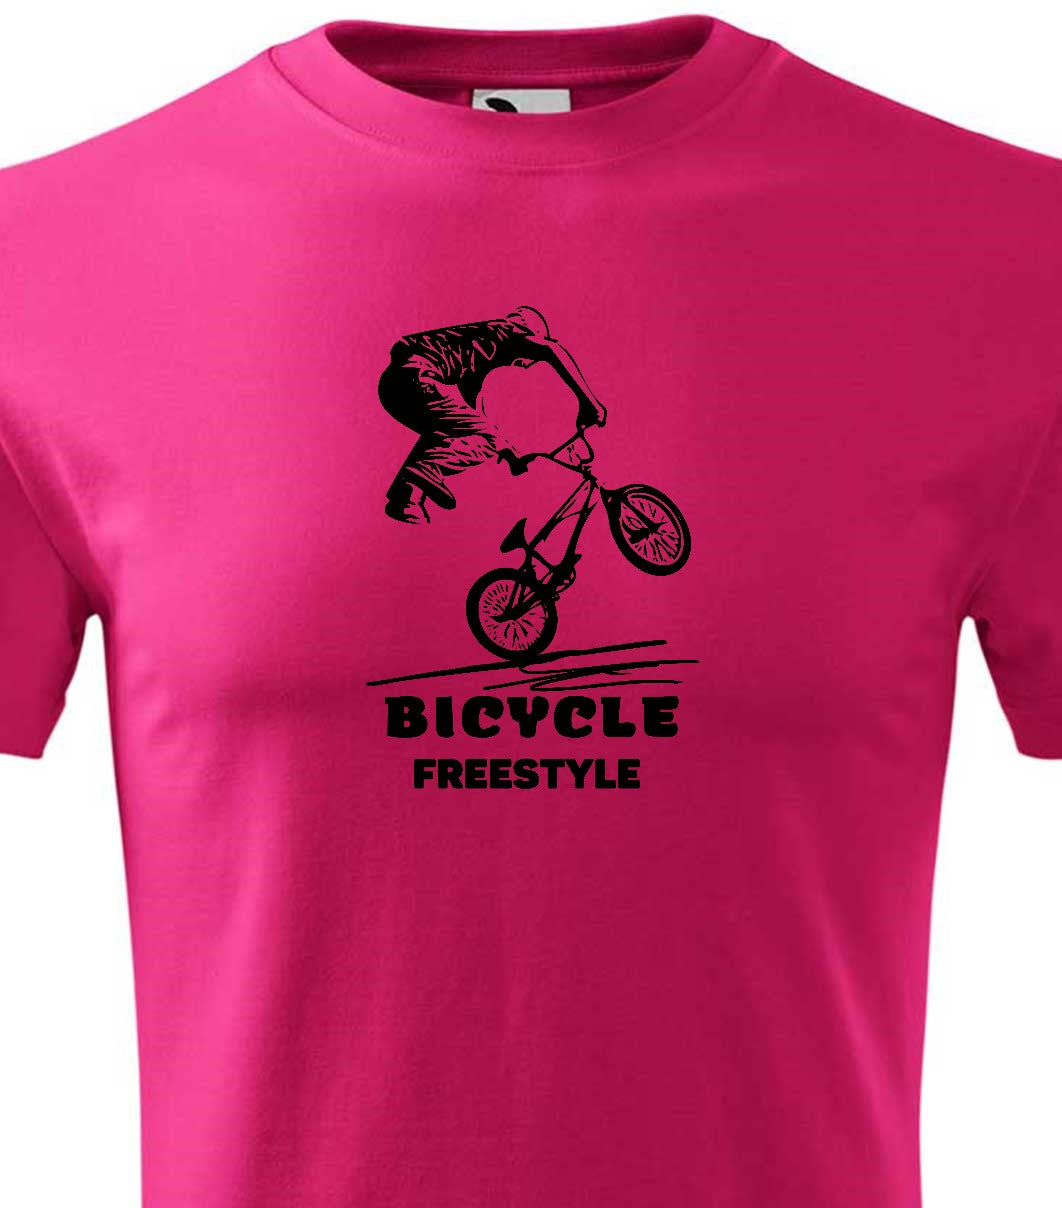 Bicycle freestyle férfi technikai póló